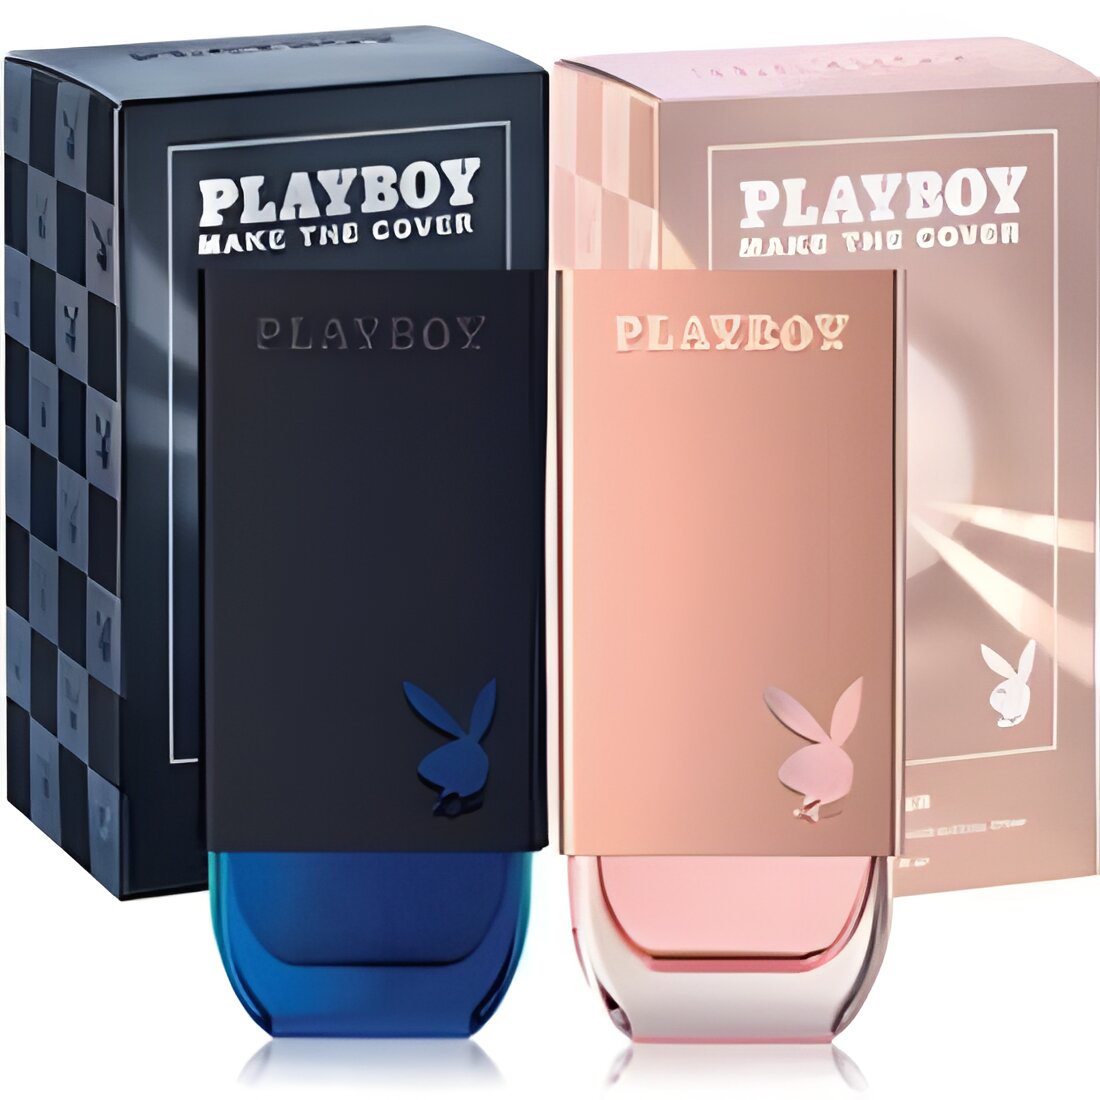 Free Playboy Perfume Samples